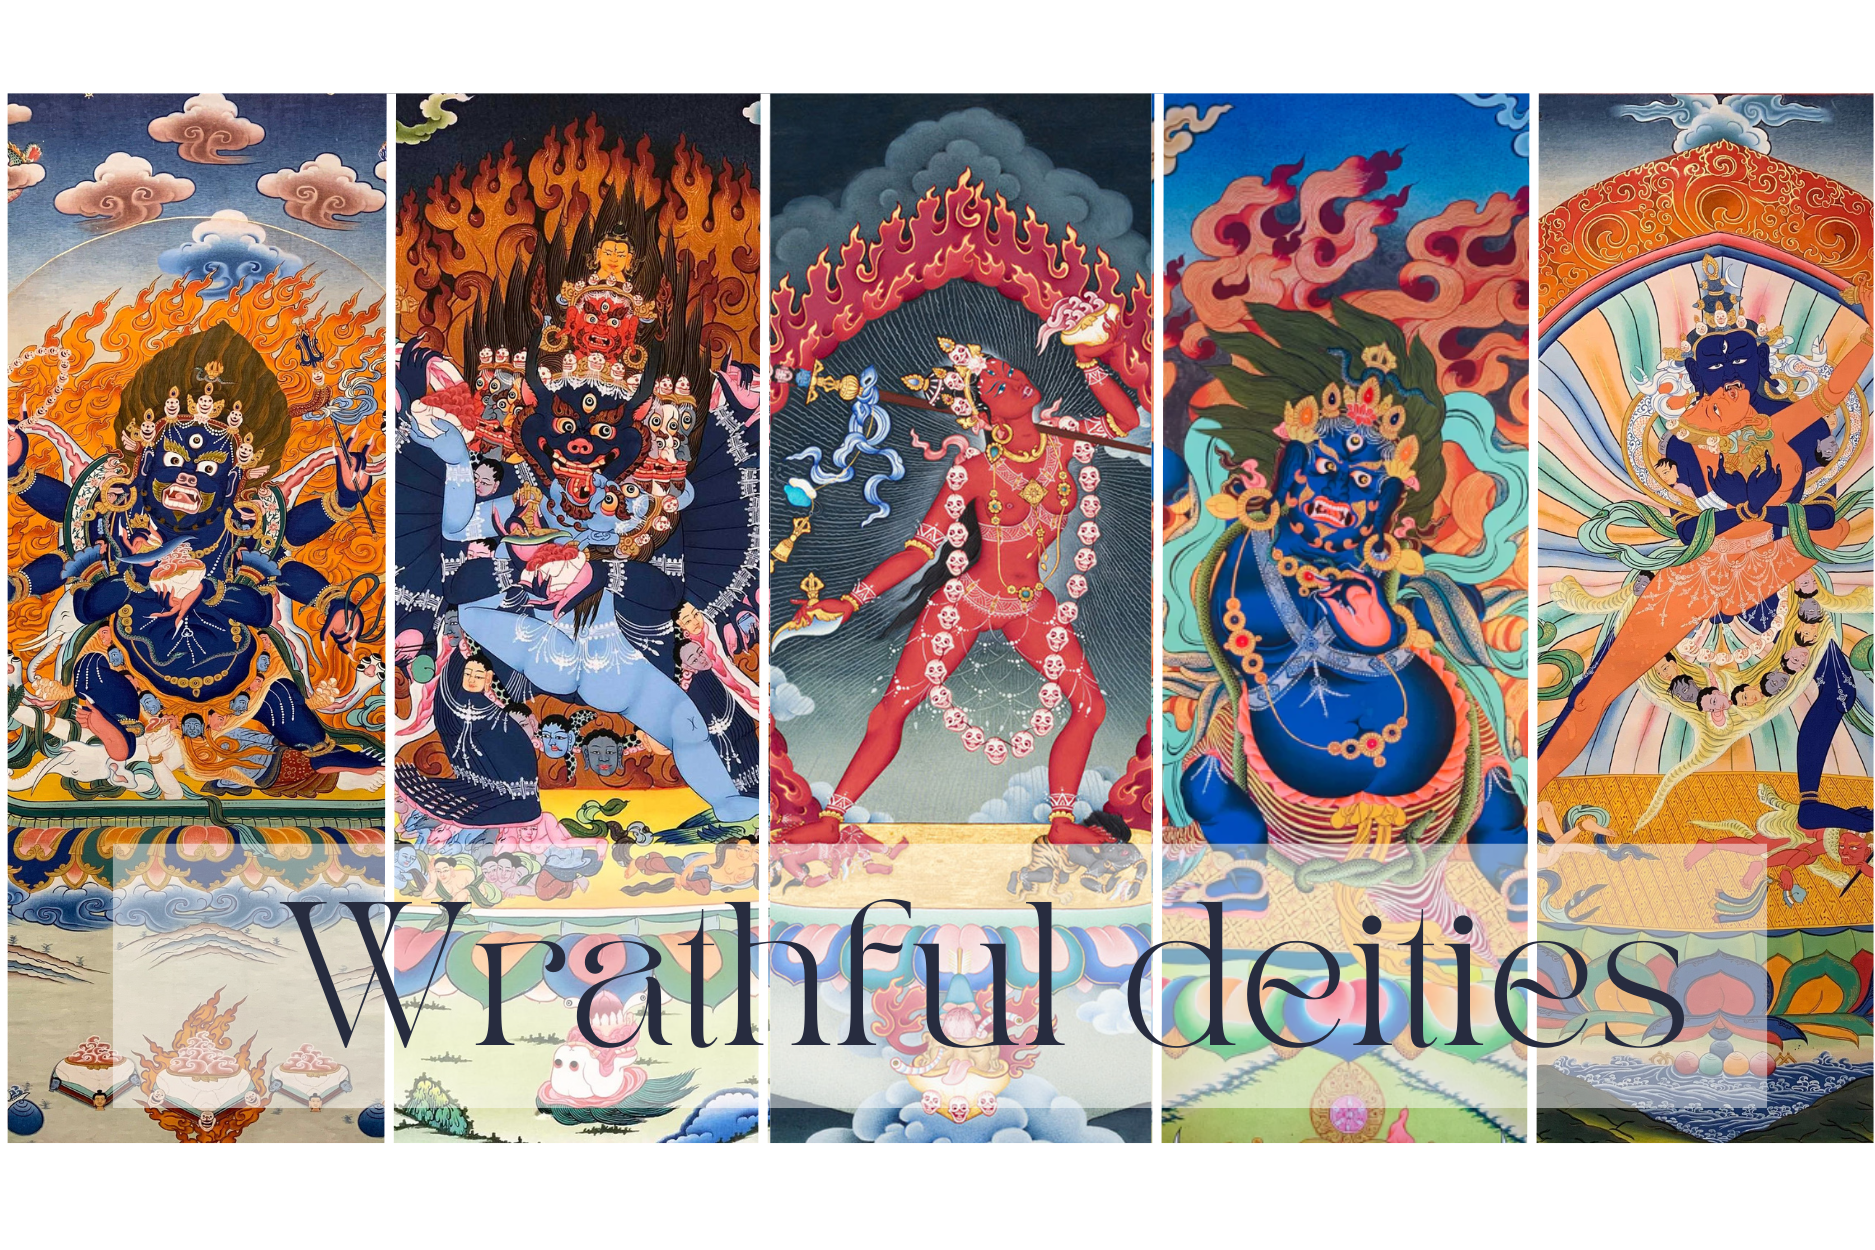 Wrathful buddhist deity